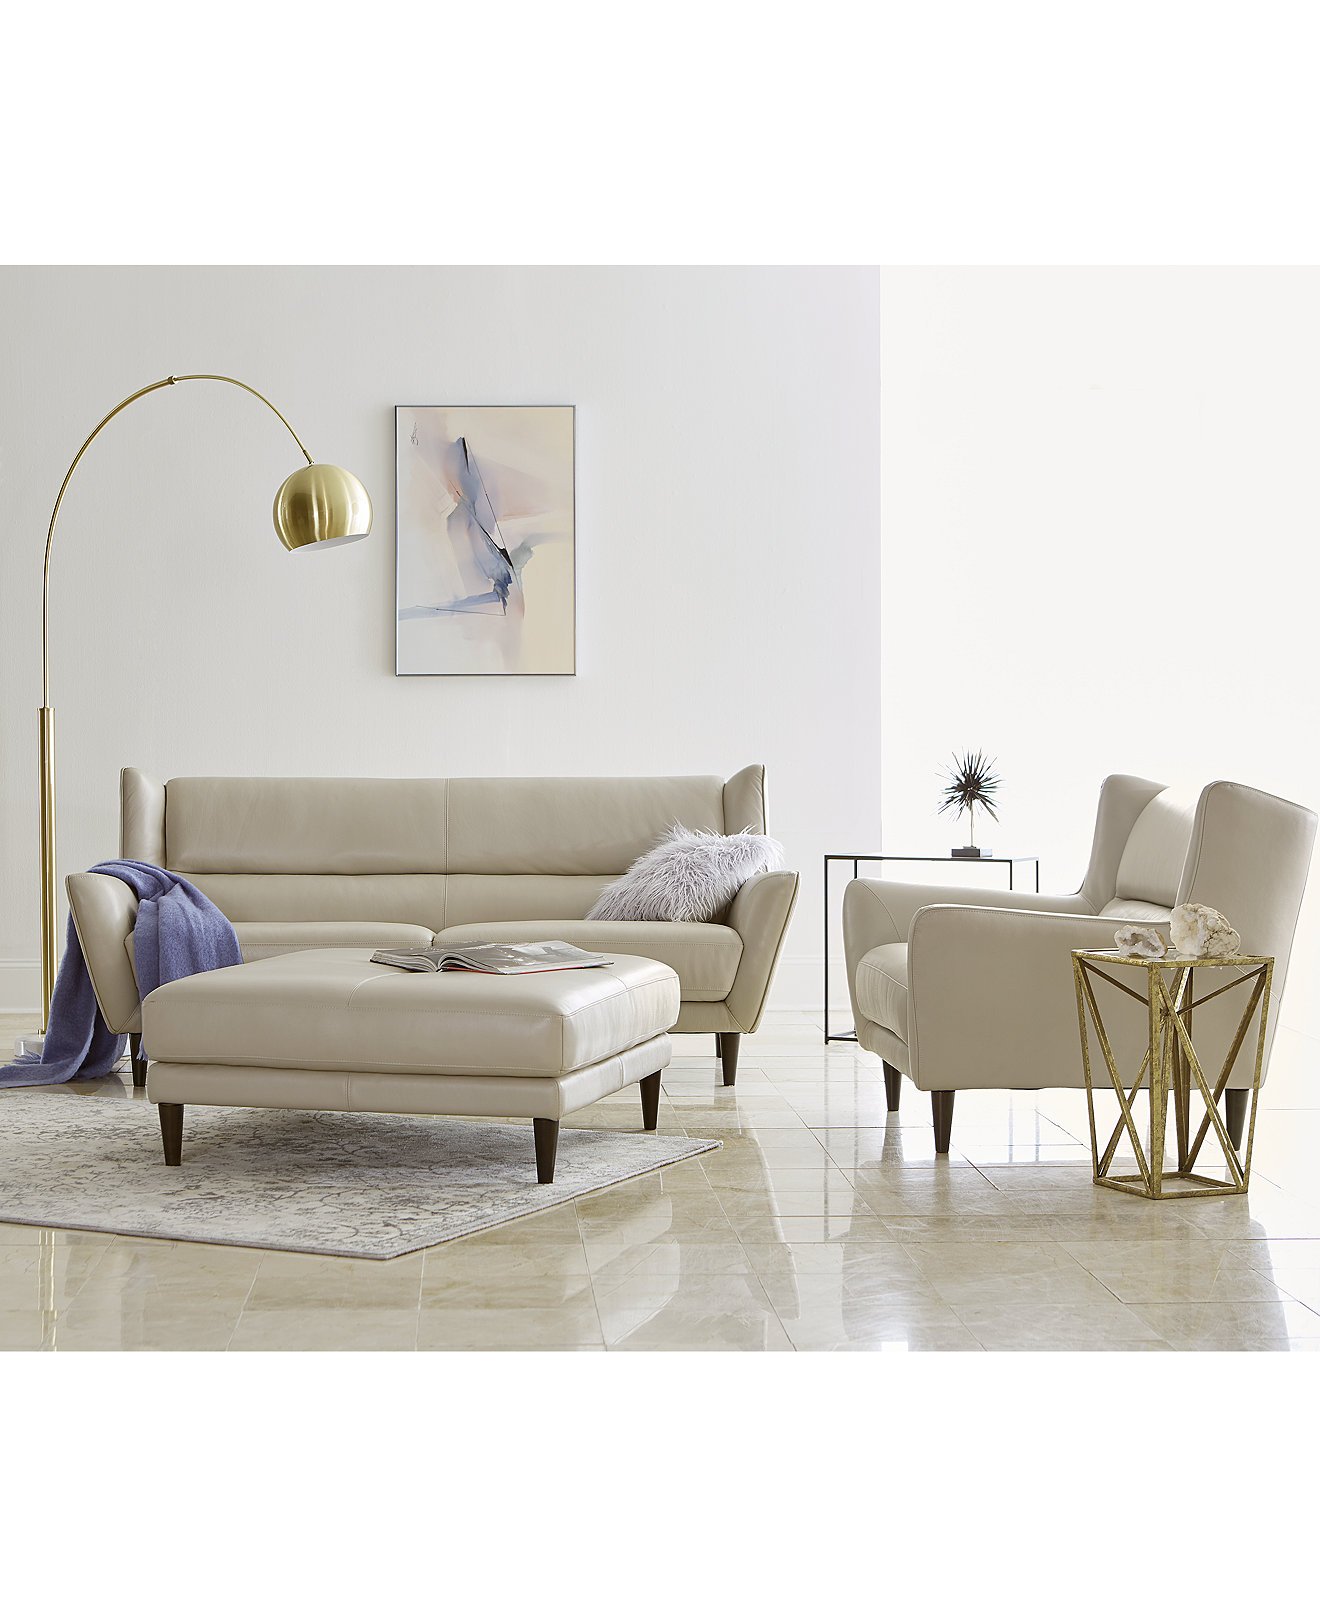 Living Room Furniture Macys - Macys Living Room Sets : What do you